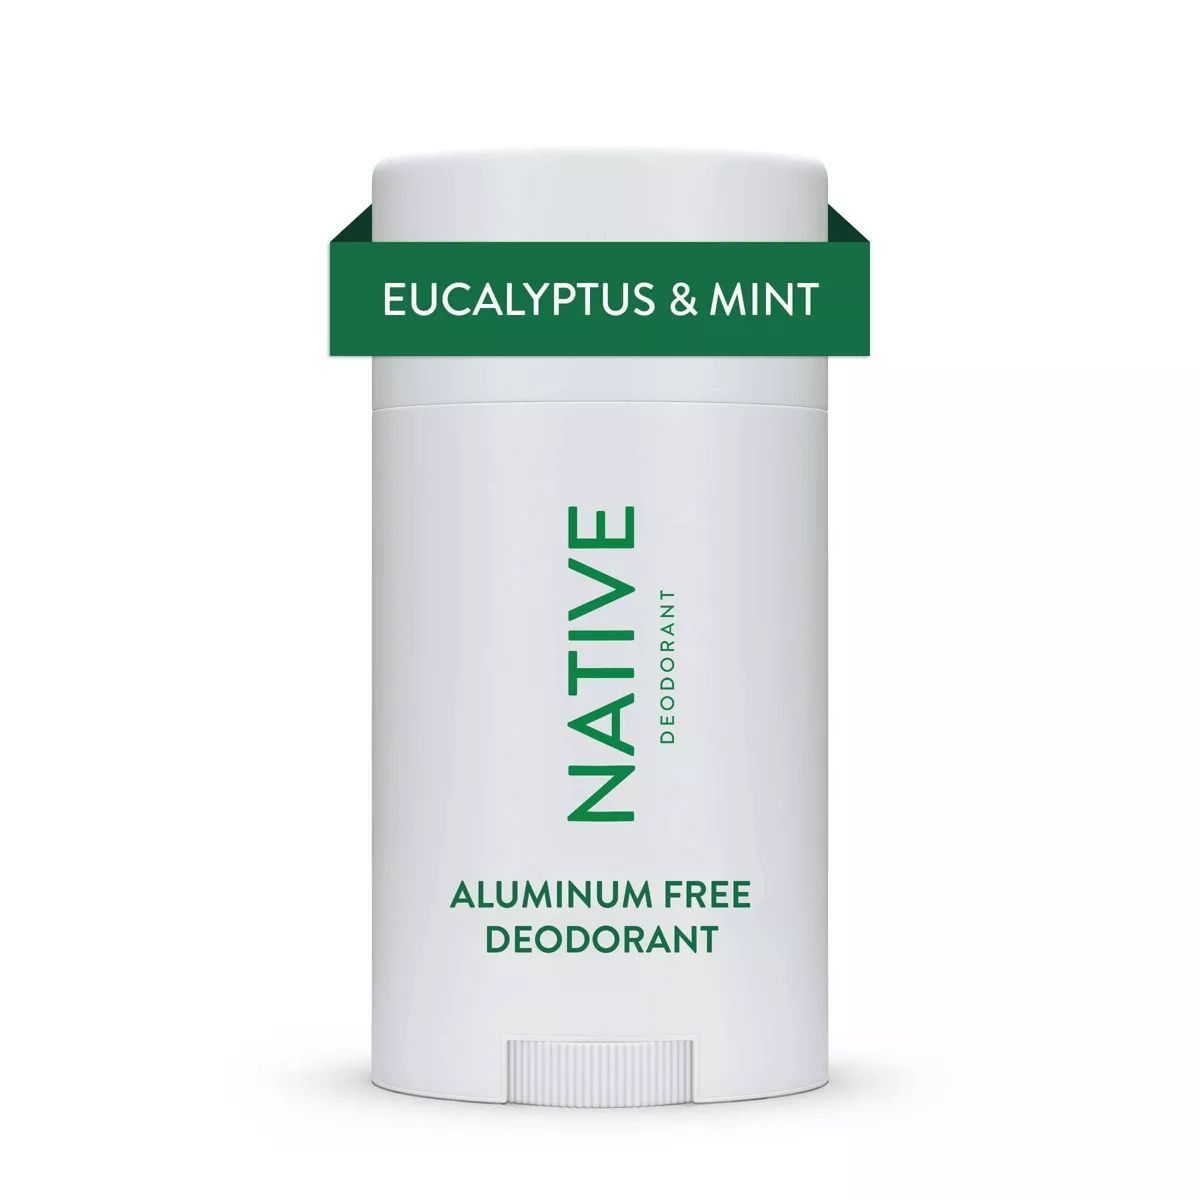 Native Deodorant - Eucalyptus & Mint - Aluminum Free - 2.65 oz | Target